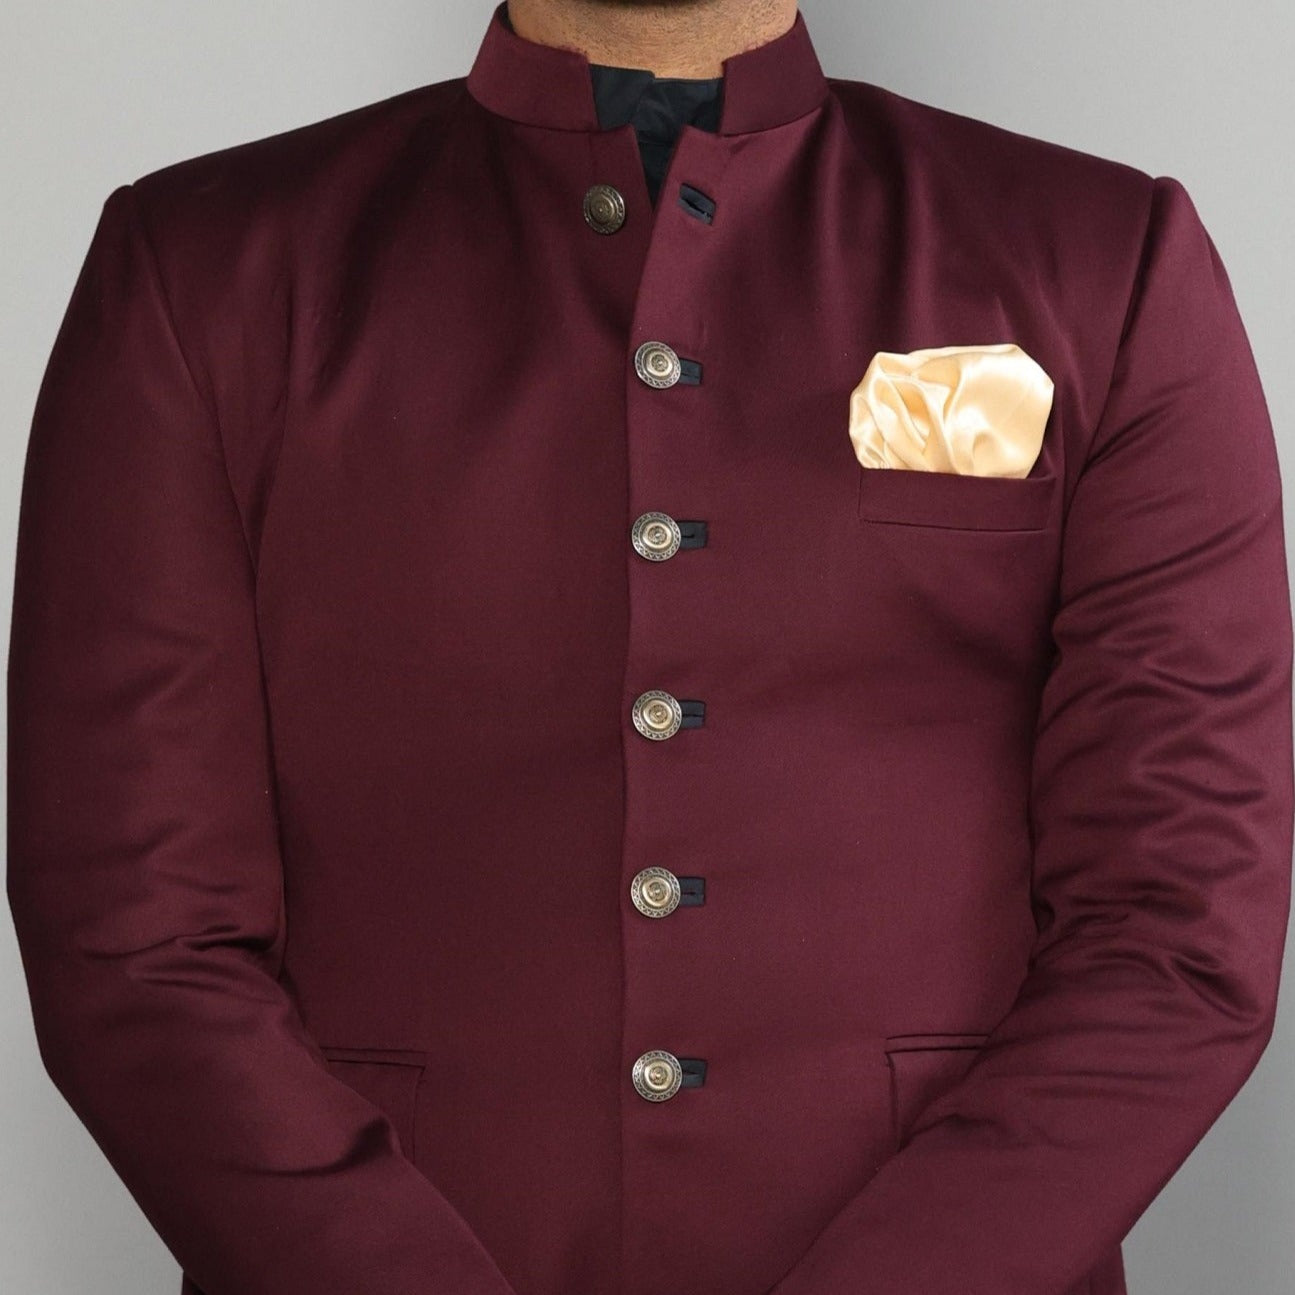 Buy Stylish and Elegant Wine Jodhpuri Suit online